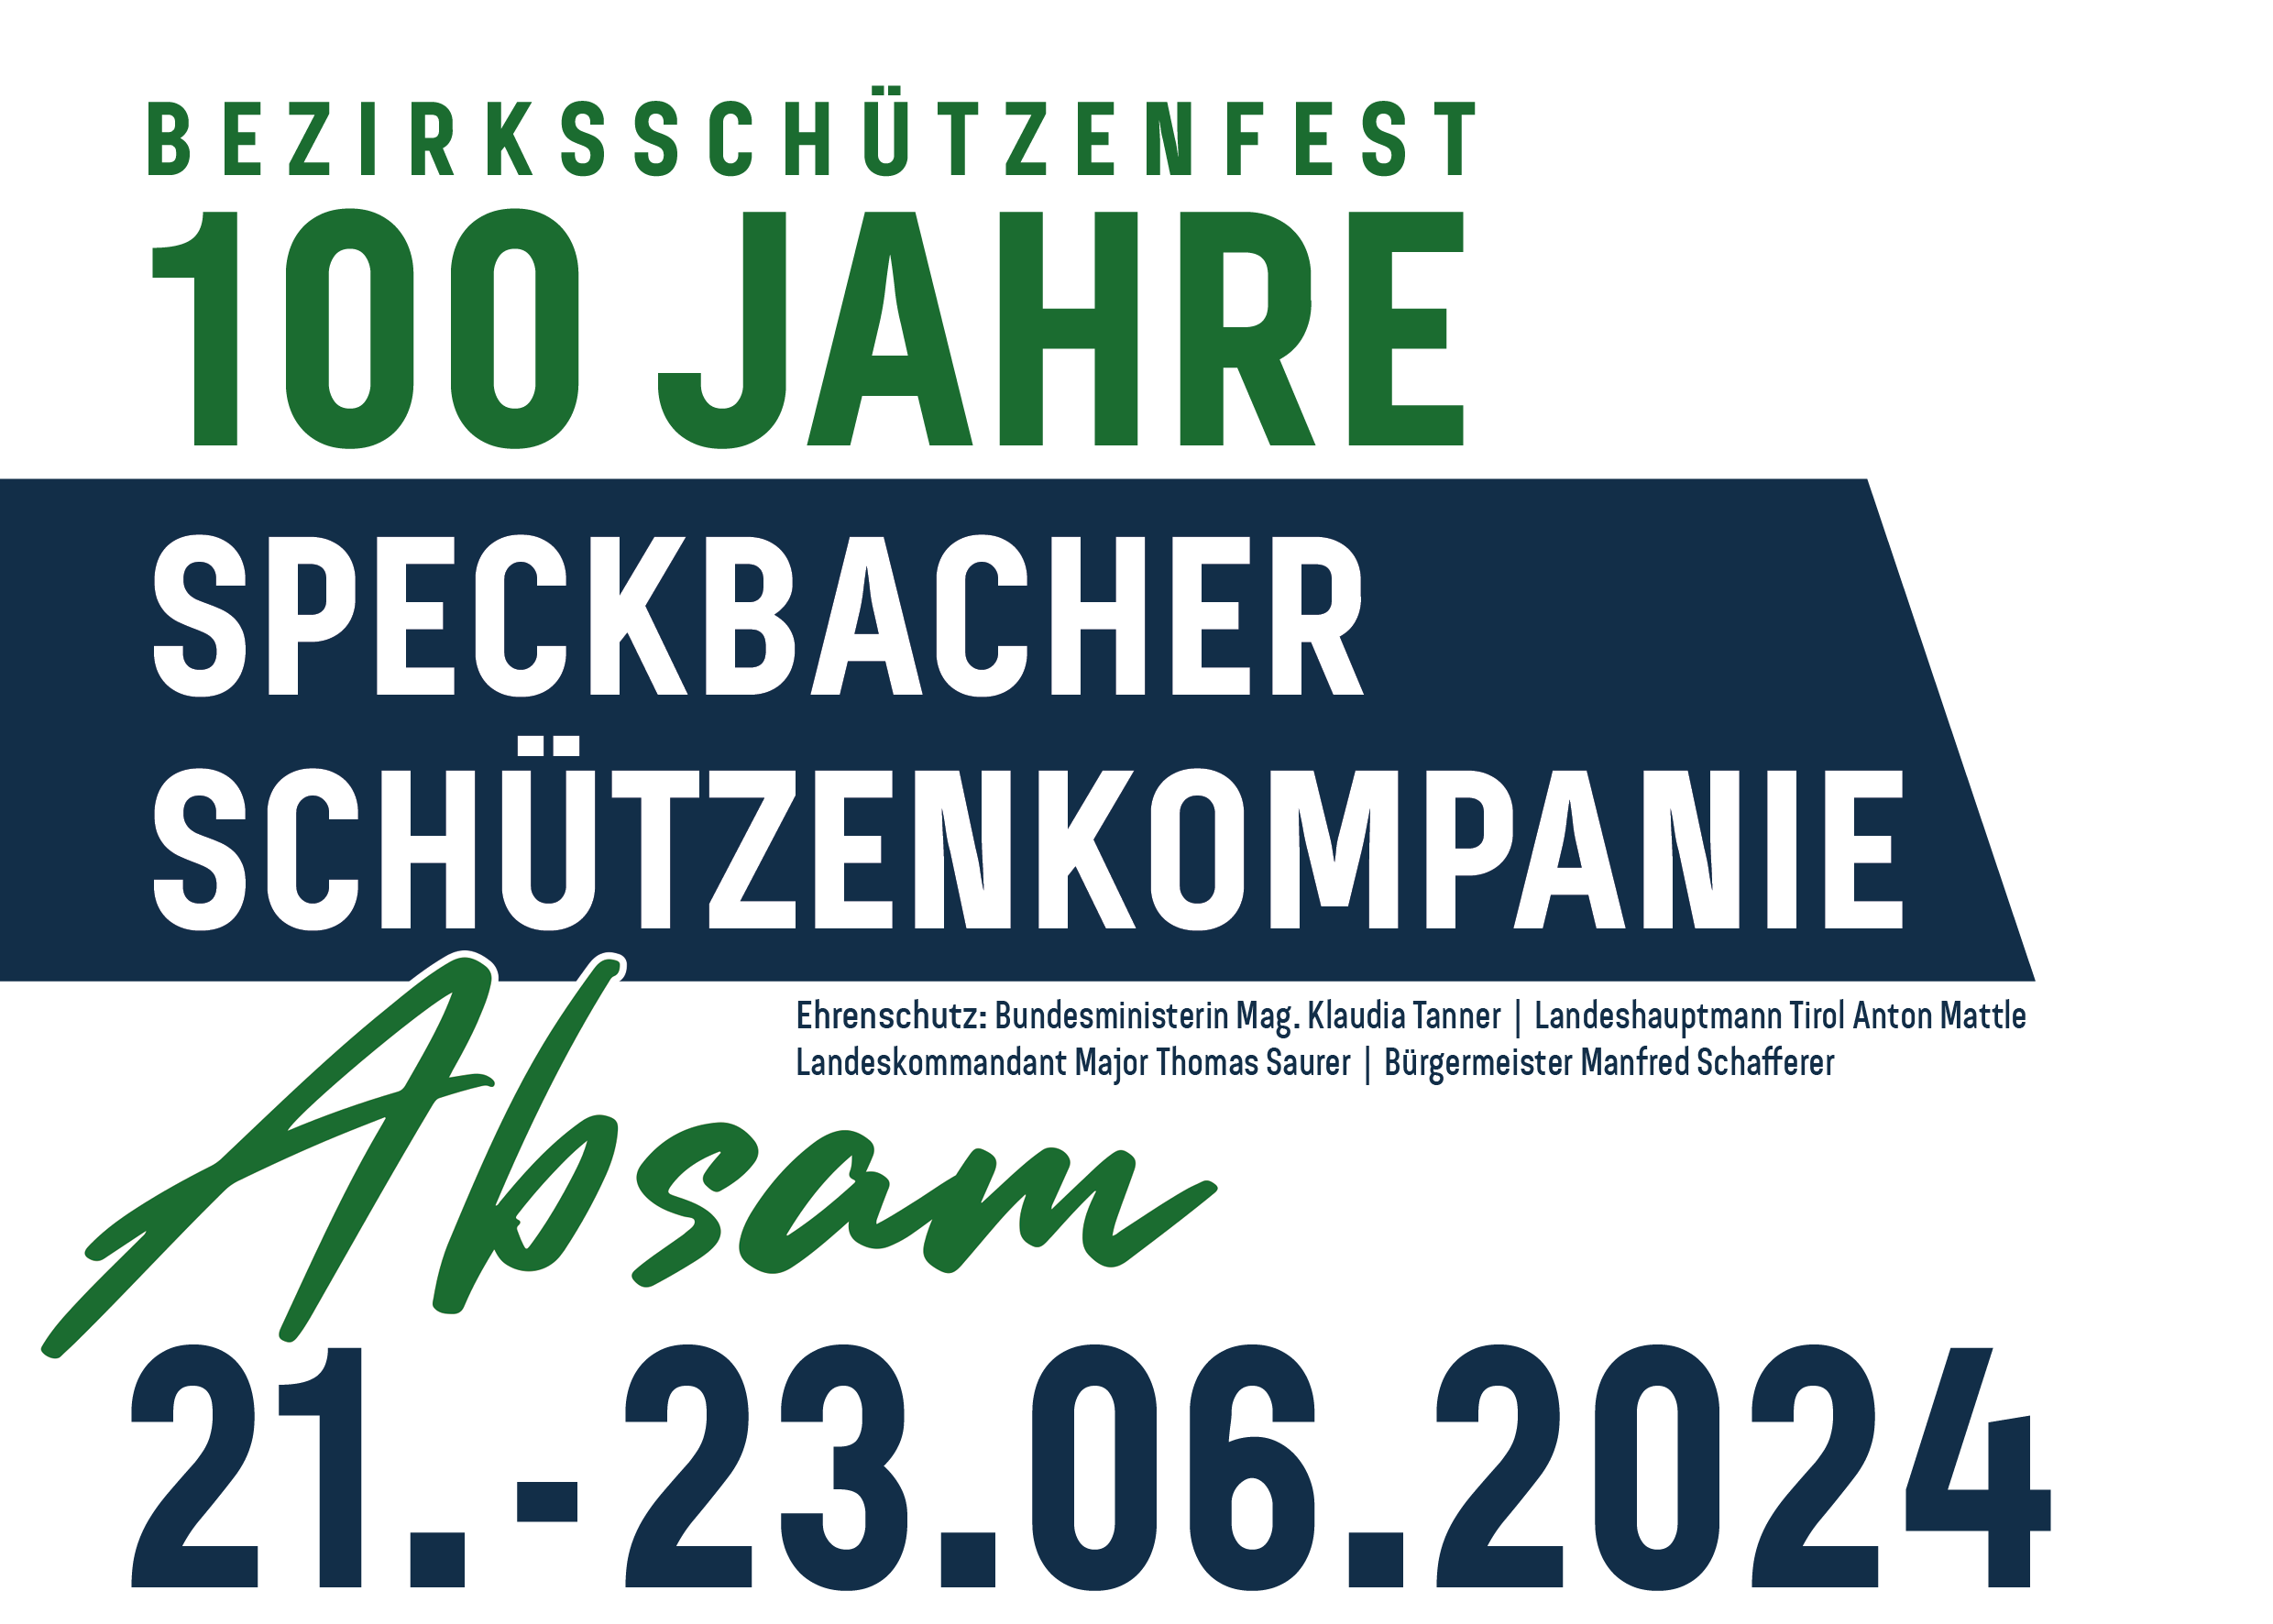 Header Bezirksschützenfest 100 Jahre Speckbacher Schützenkompanie Absam